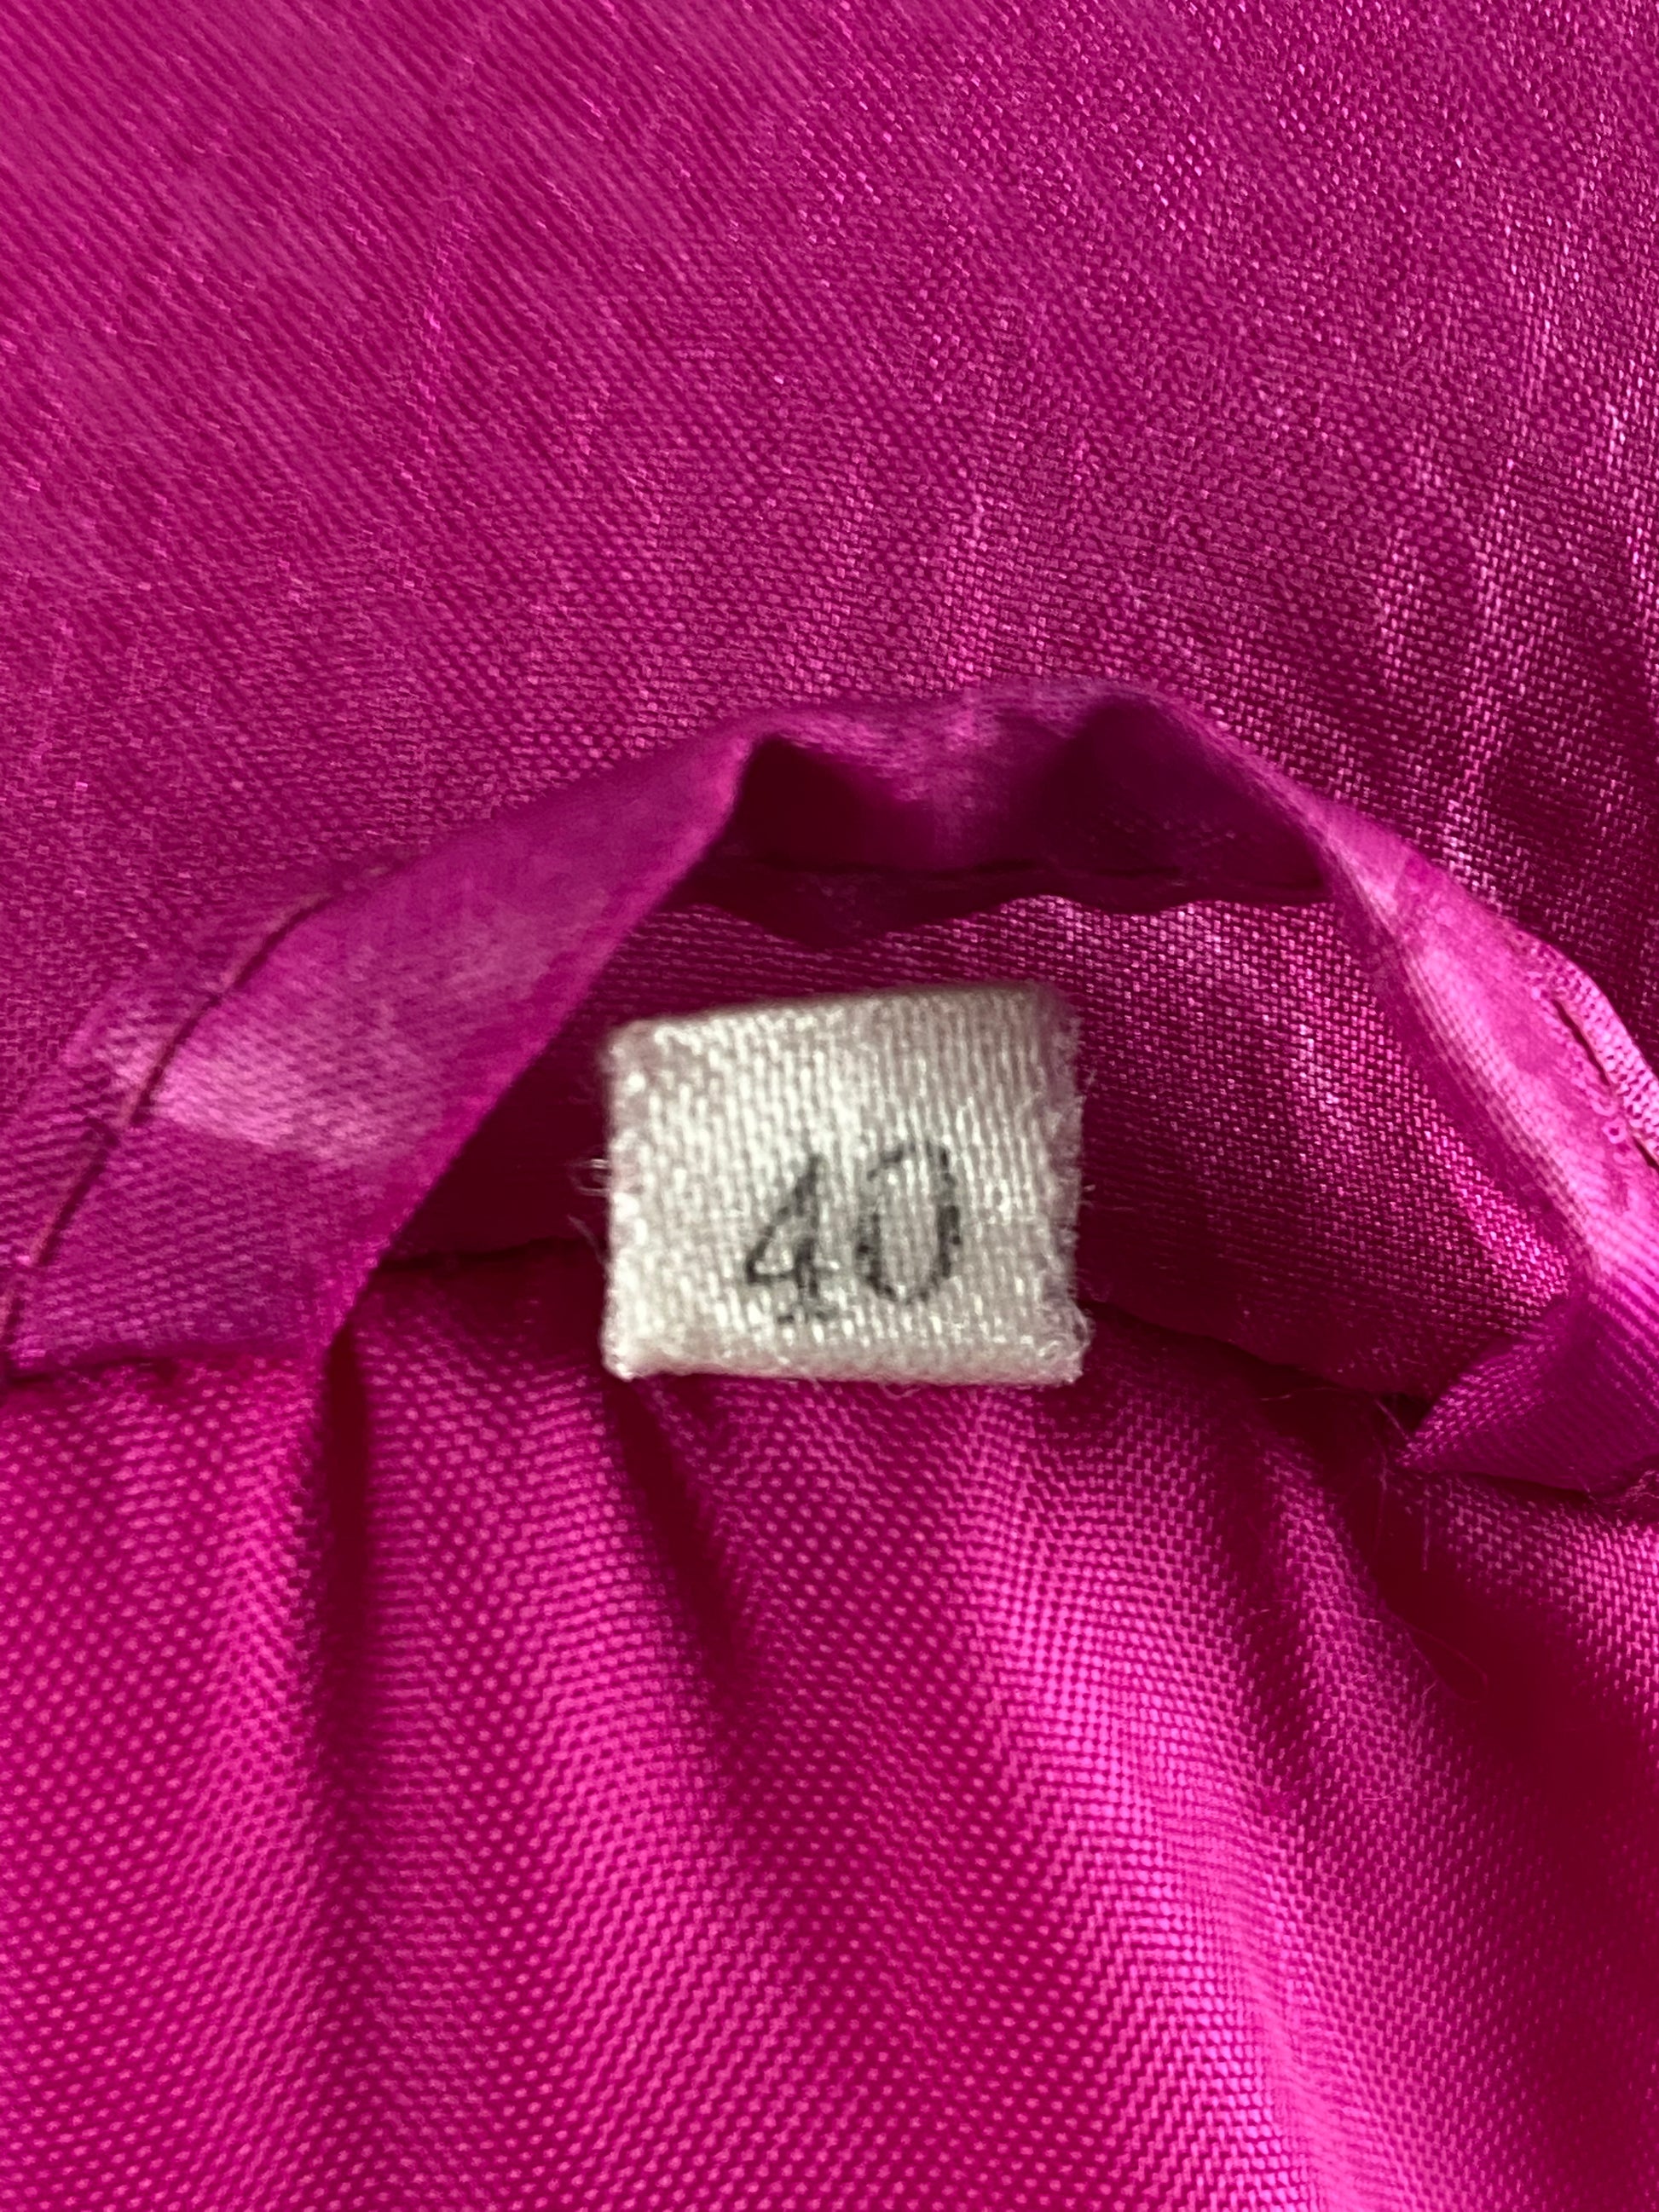 90s Vintage Women's Ski Jacket - Large Pink Nylon